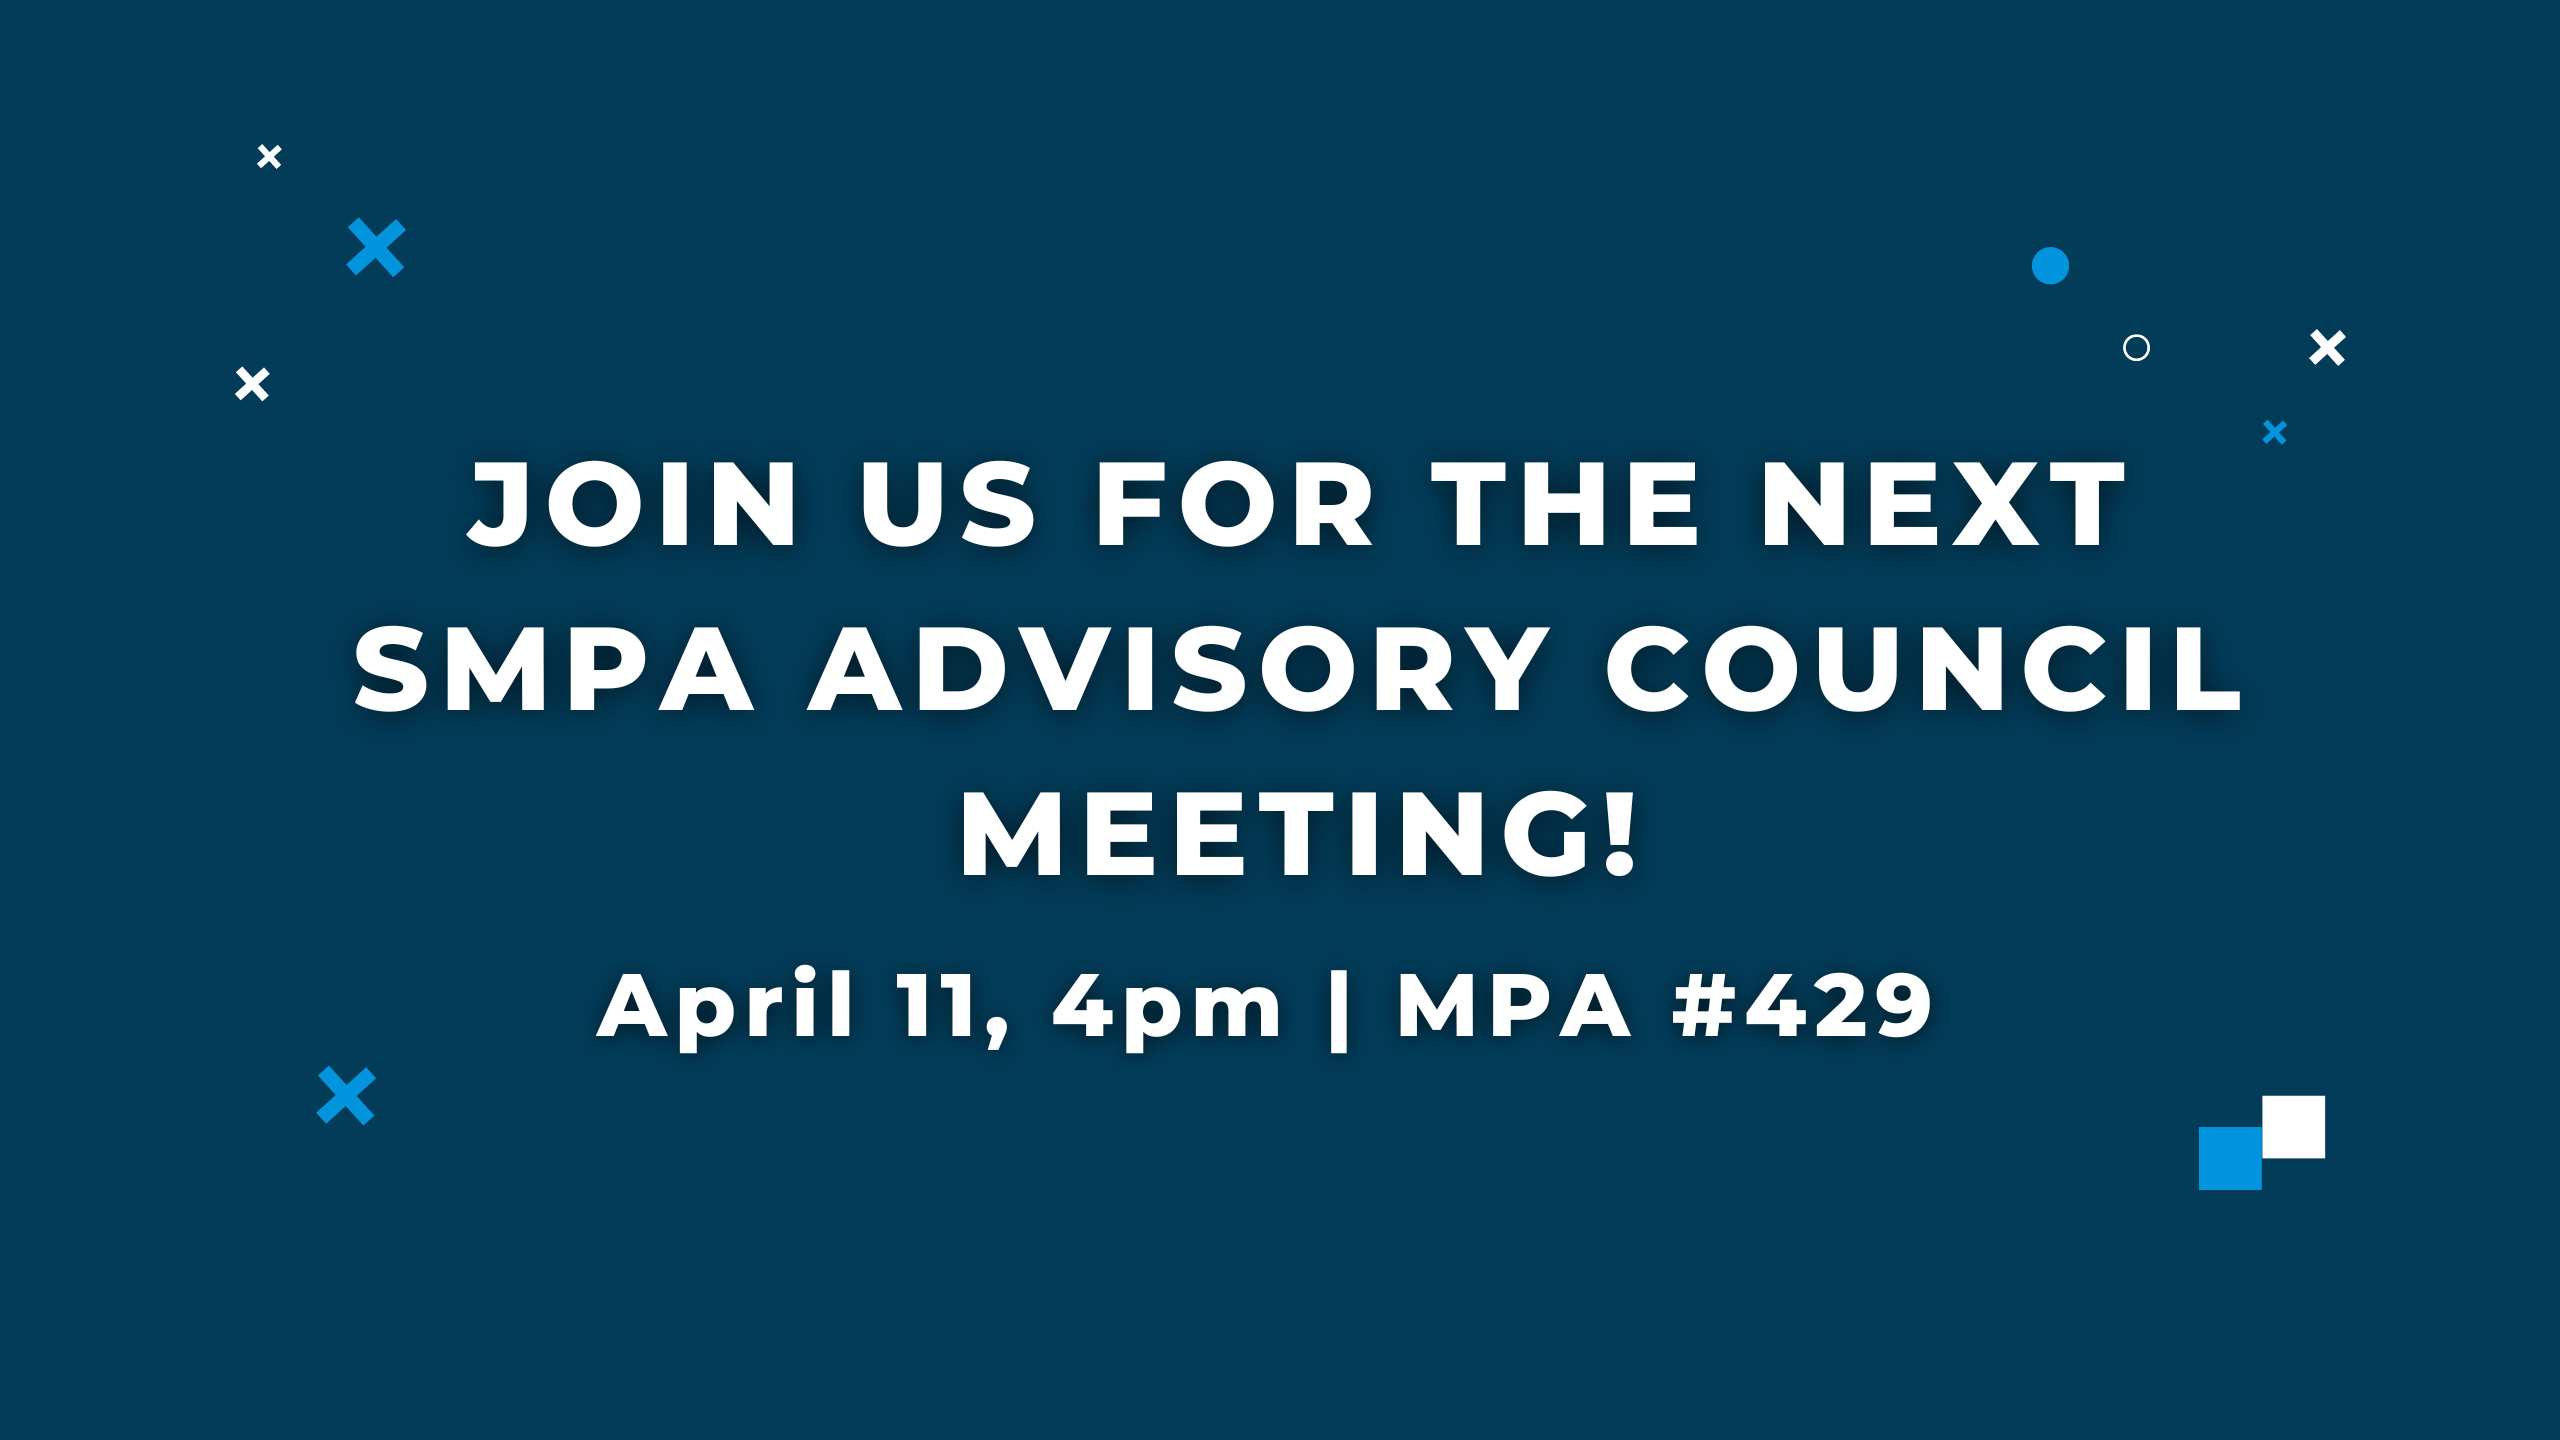 SMPA Advisory Council April Meeting